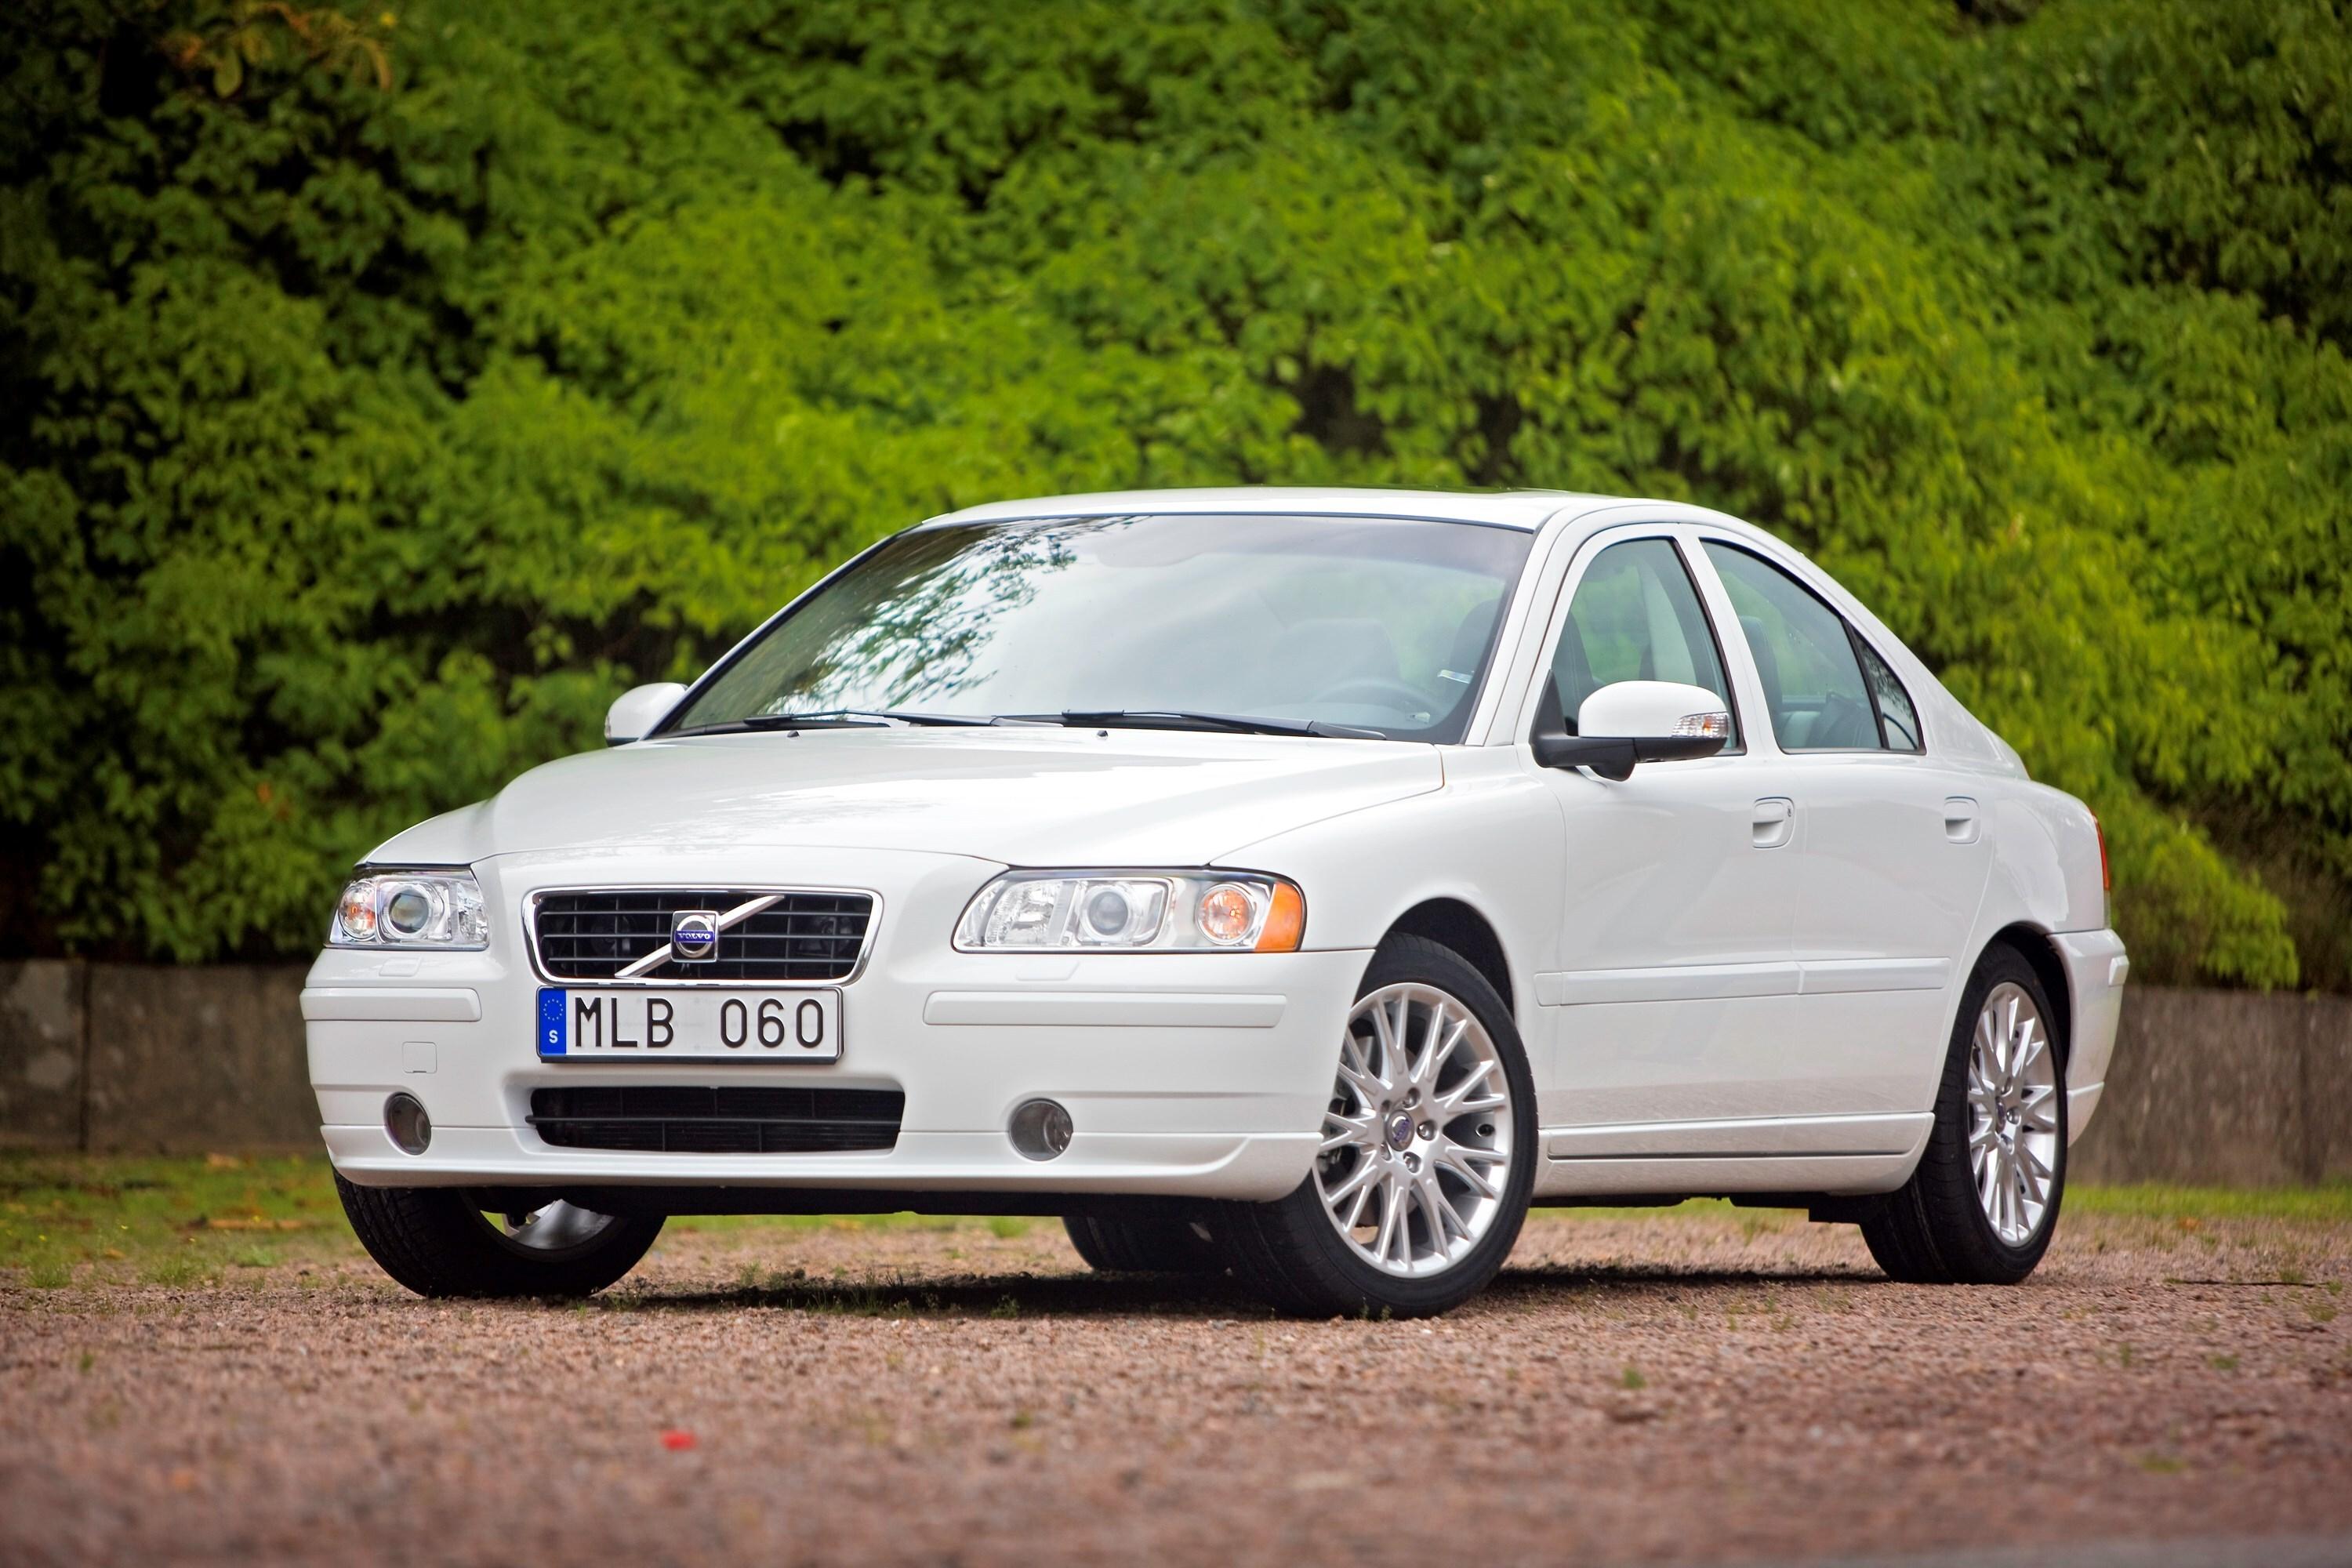 Volvo s60 1. Volvo s60. Volvo s60 1 поколения. Volvo s60 t5. Volvo s60 2009.